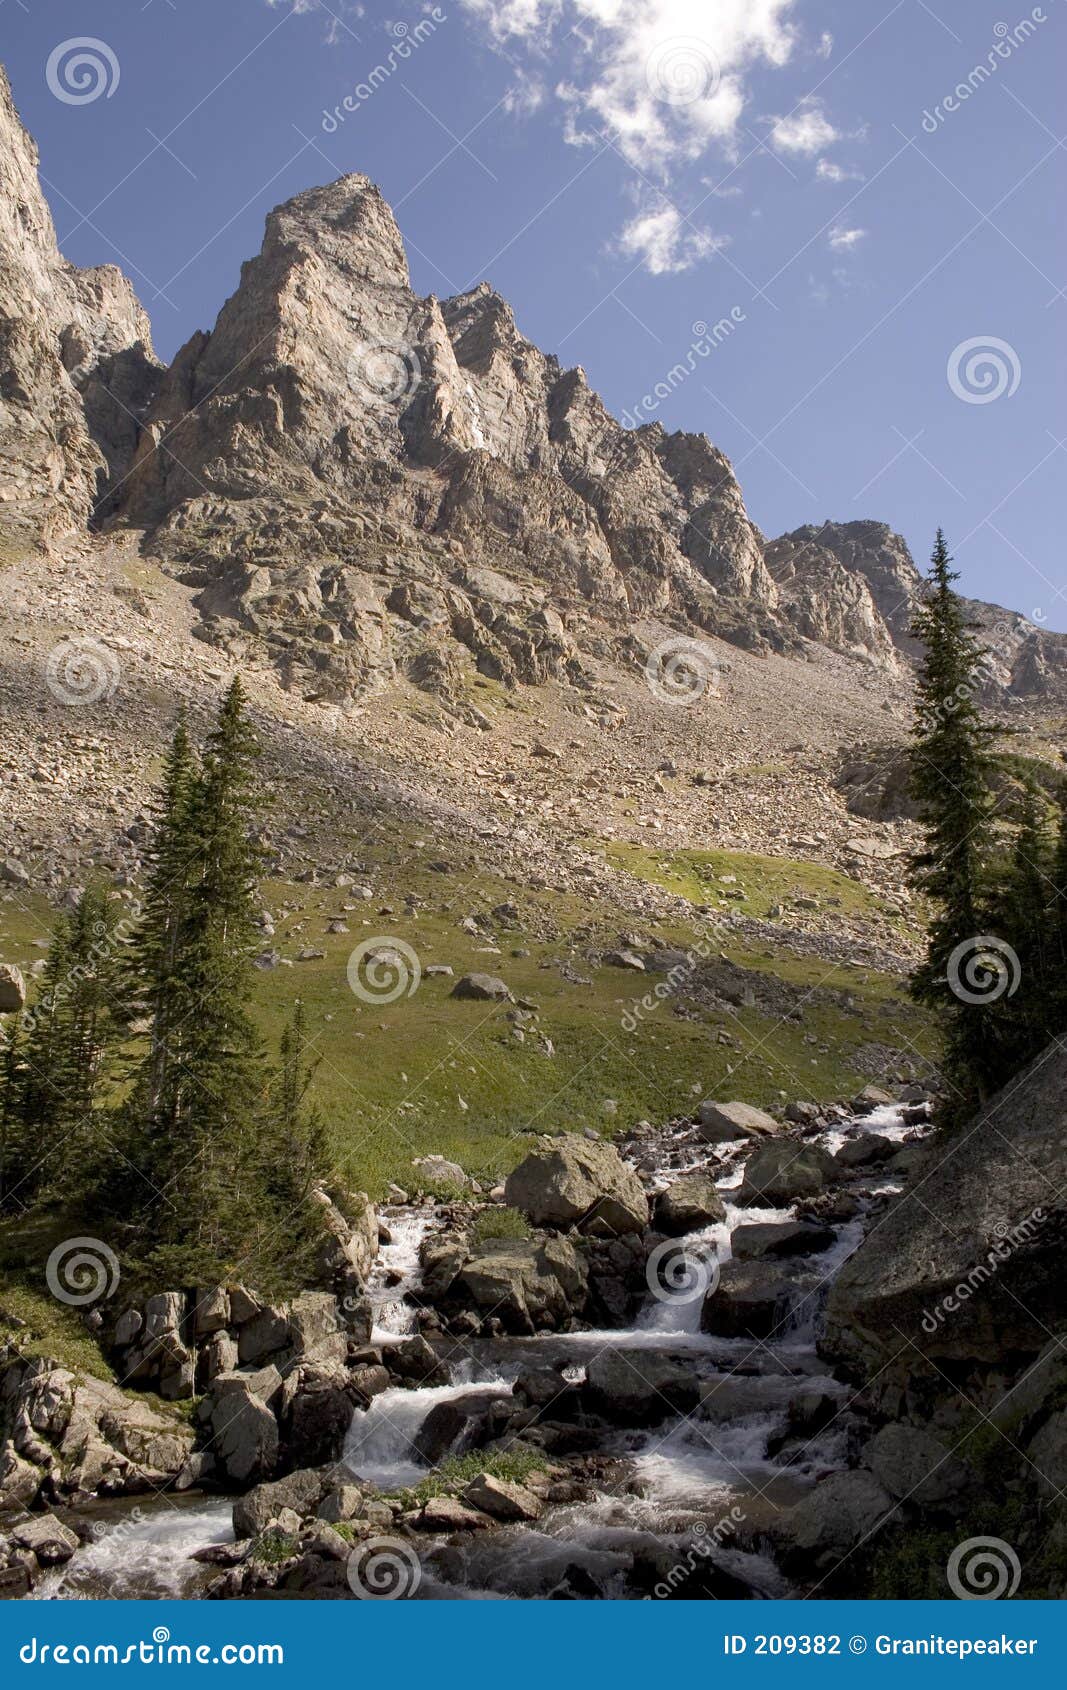 montana wilderness